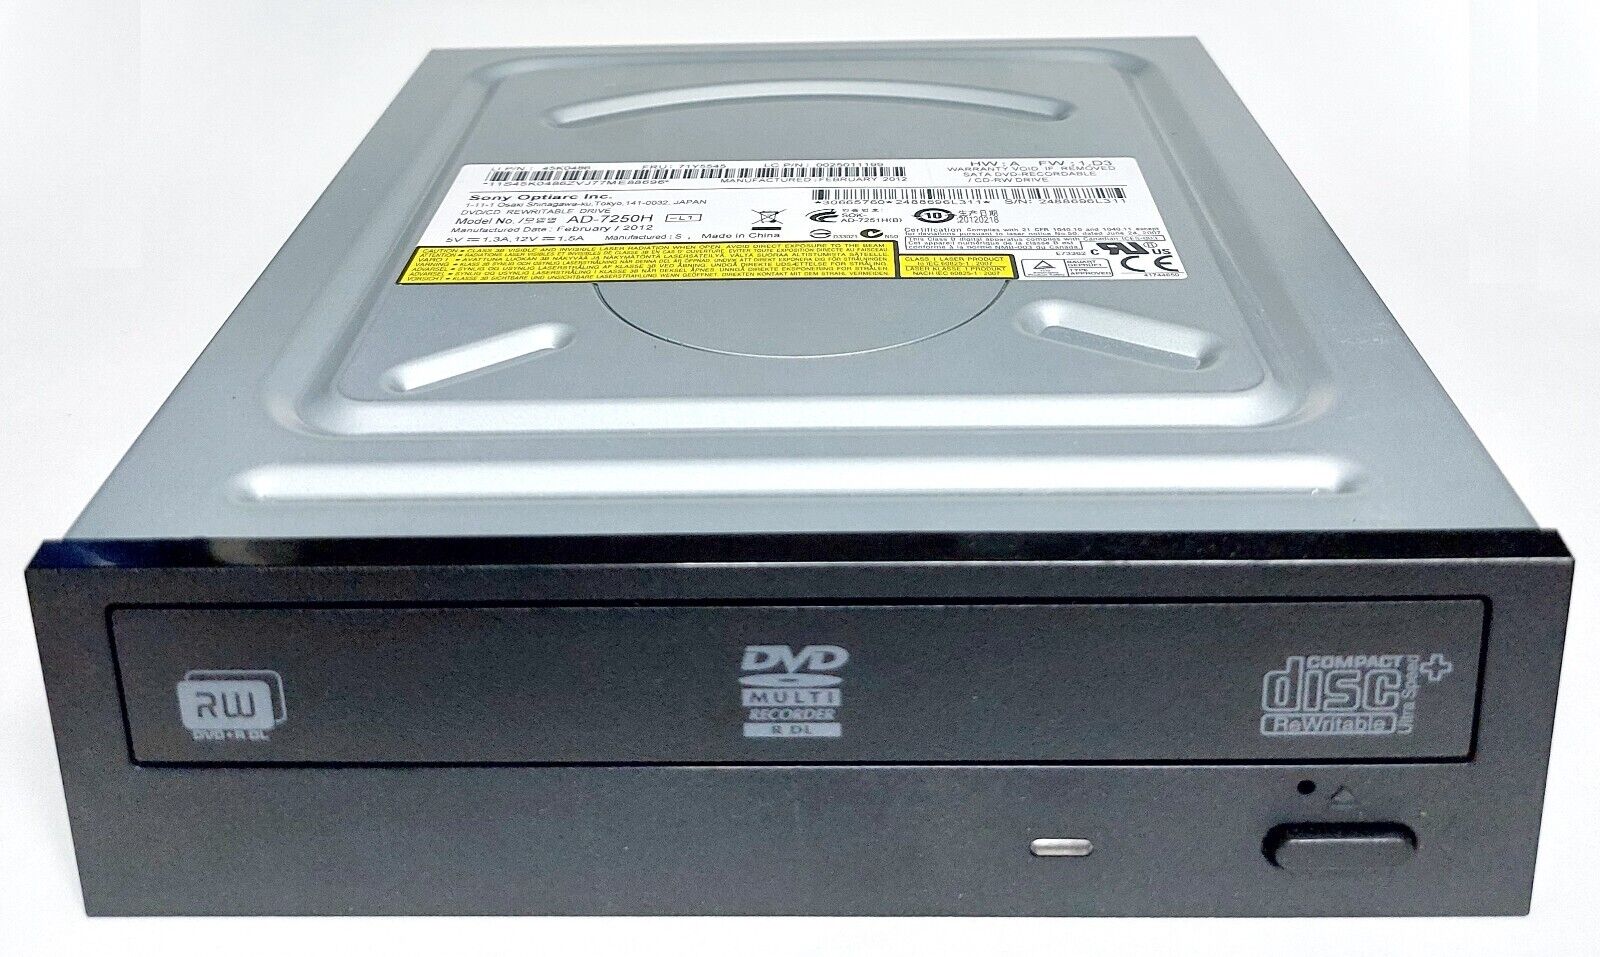 Sony Optiarc AD-7250H SATA DVD CDRW Optical Drive (Black)